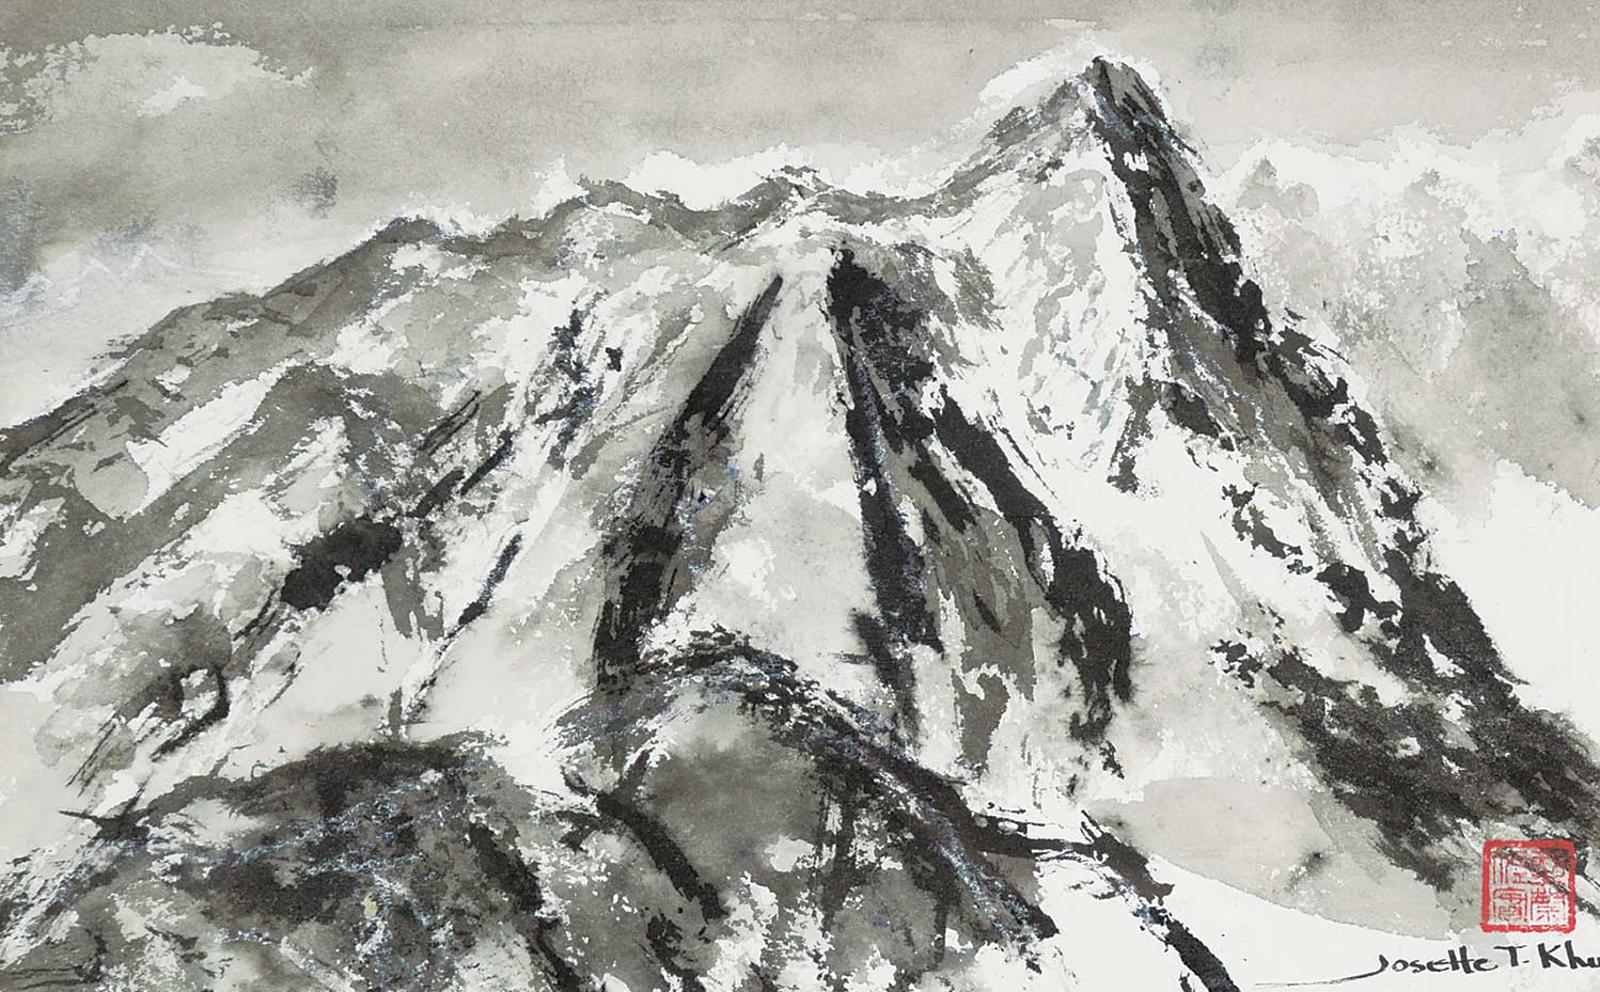 Josette T. Khu (1933) - Untitled - Mountain Vista